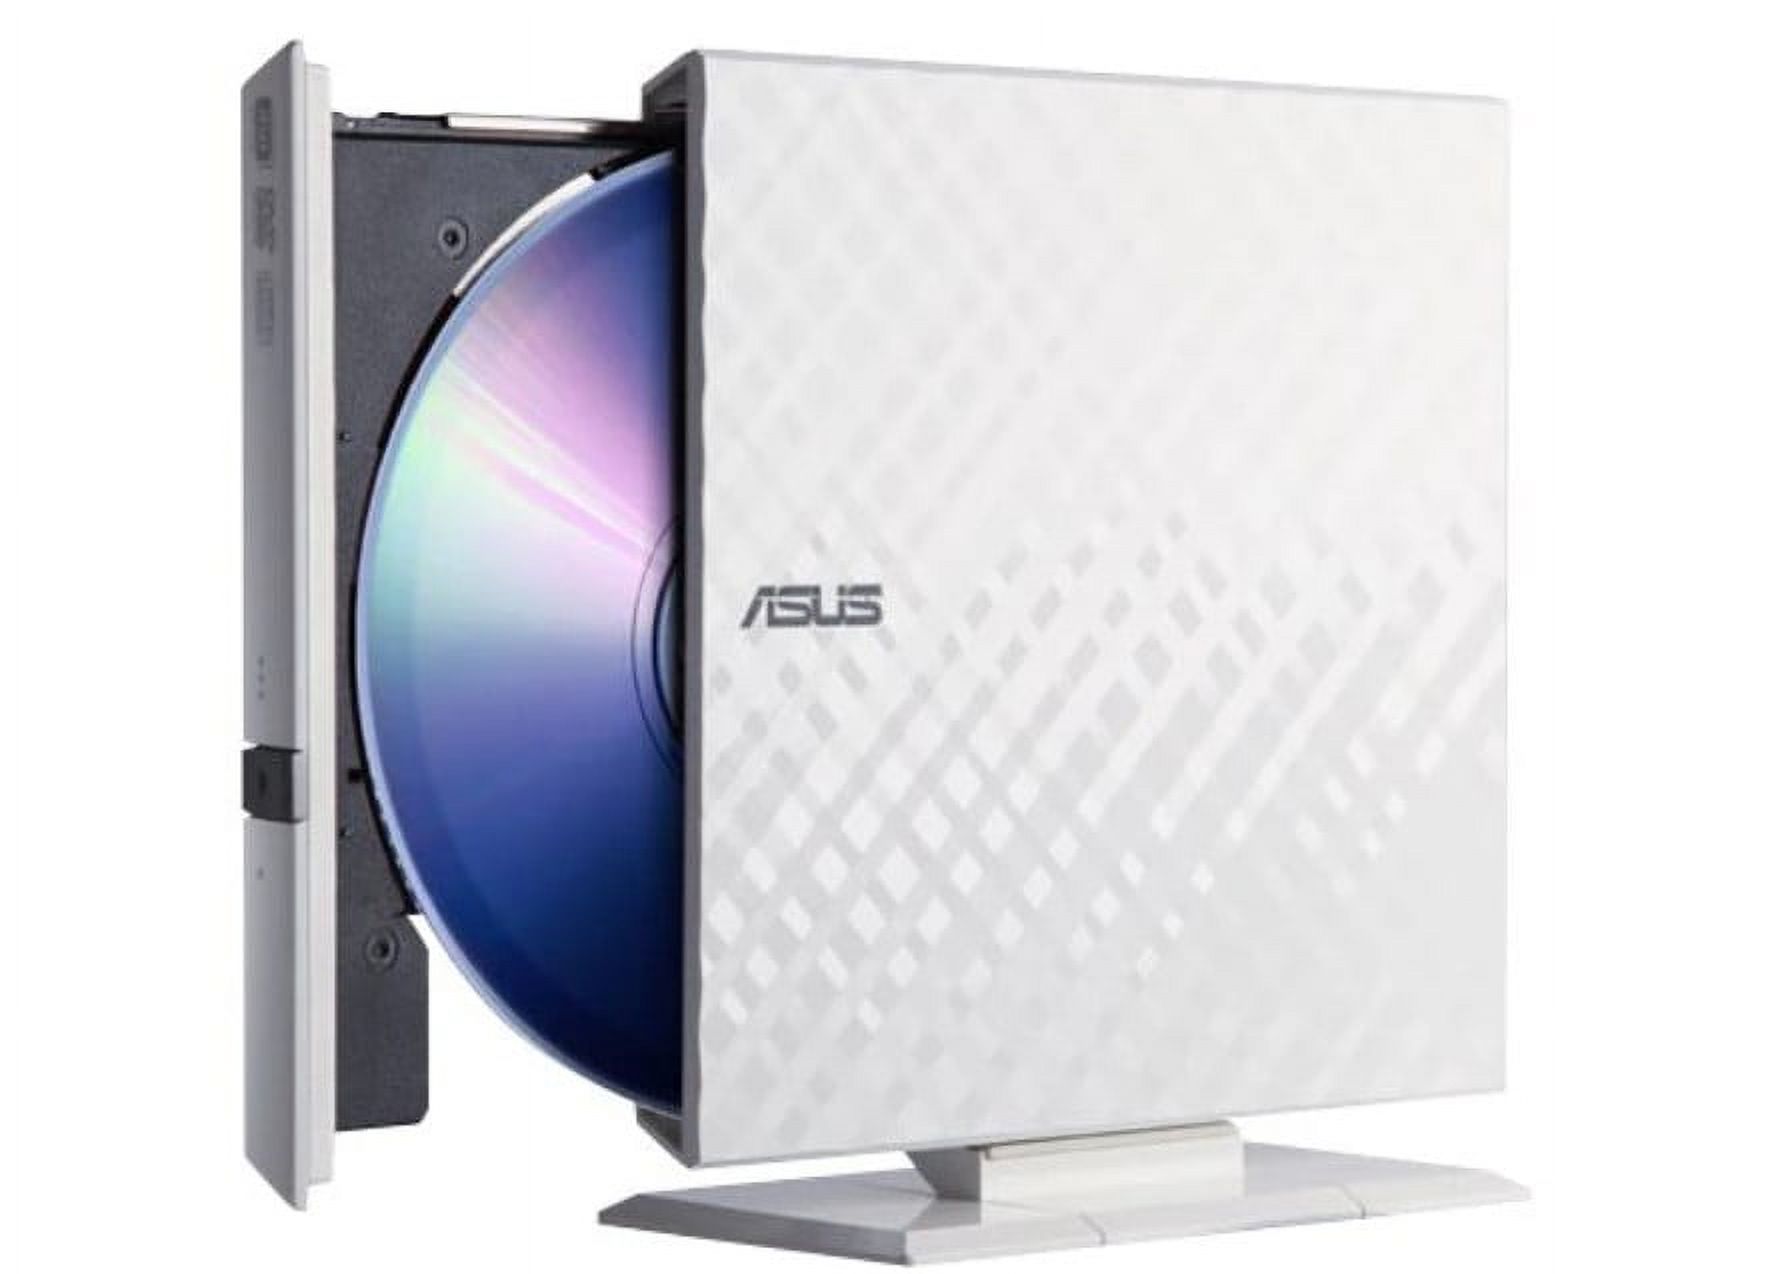 Asus SDRW-08D2S-U Portable DVD-Writer - External - White - image 2 of 3